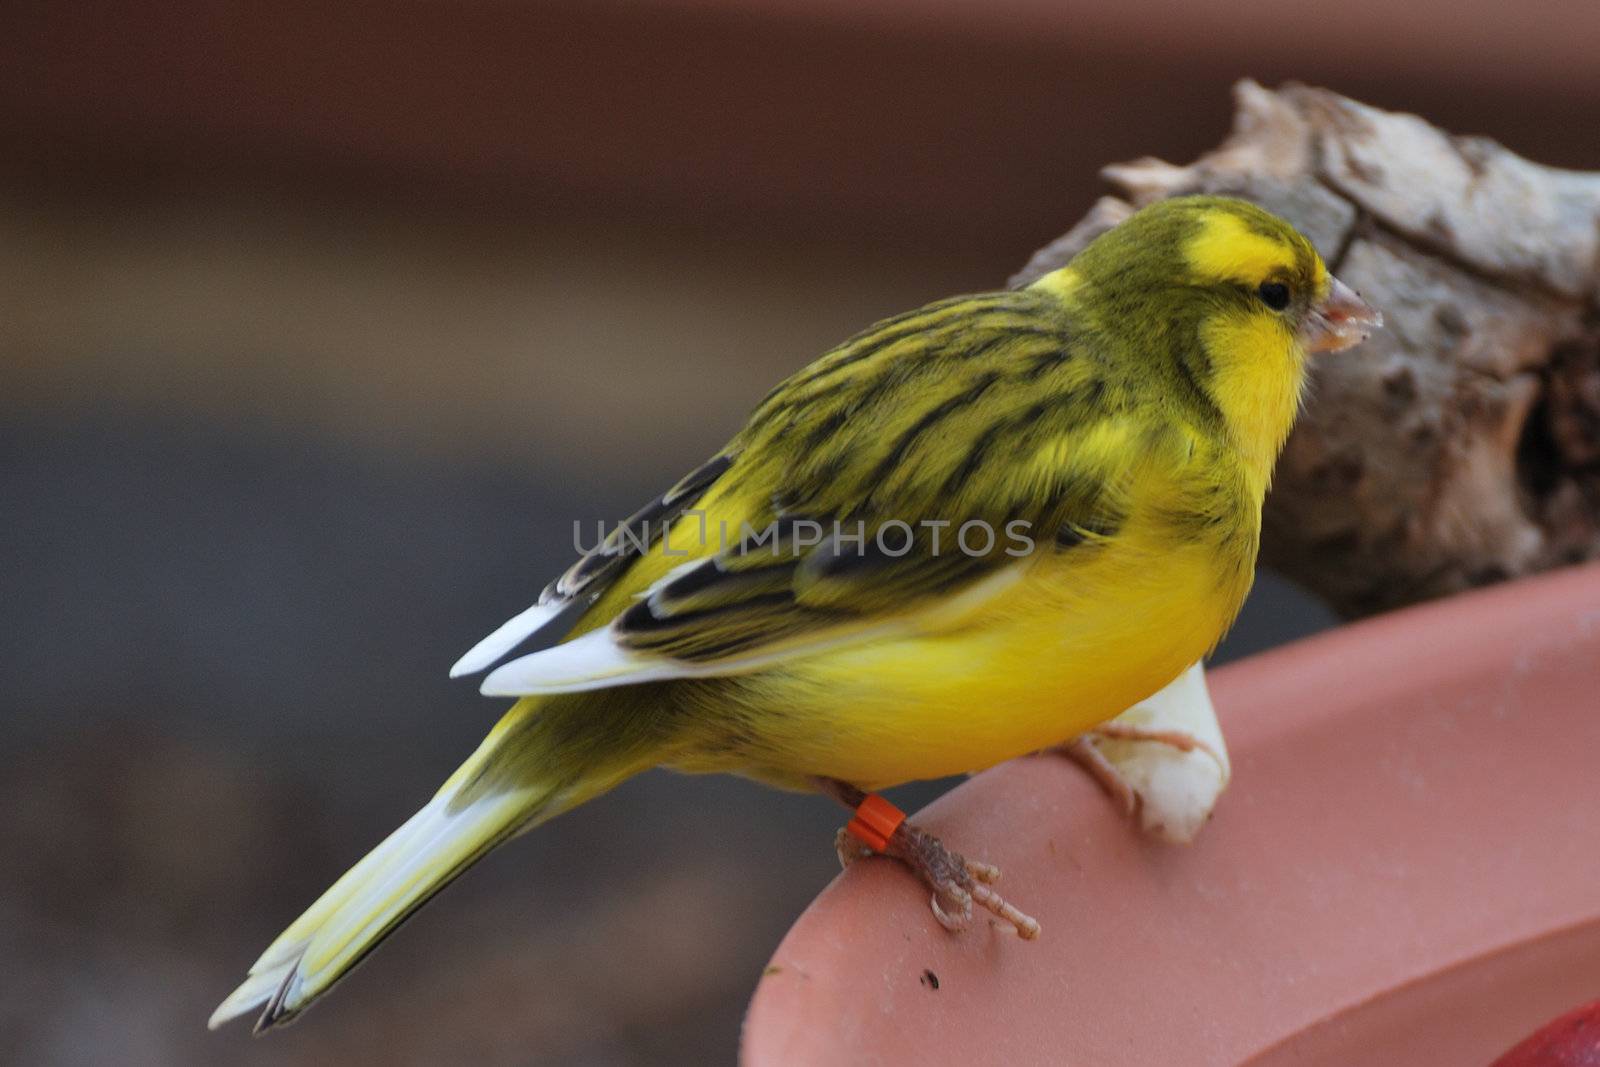 Exotic yellow bird by pauws99